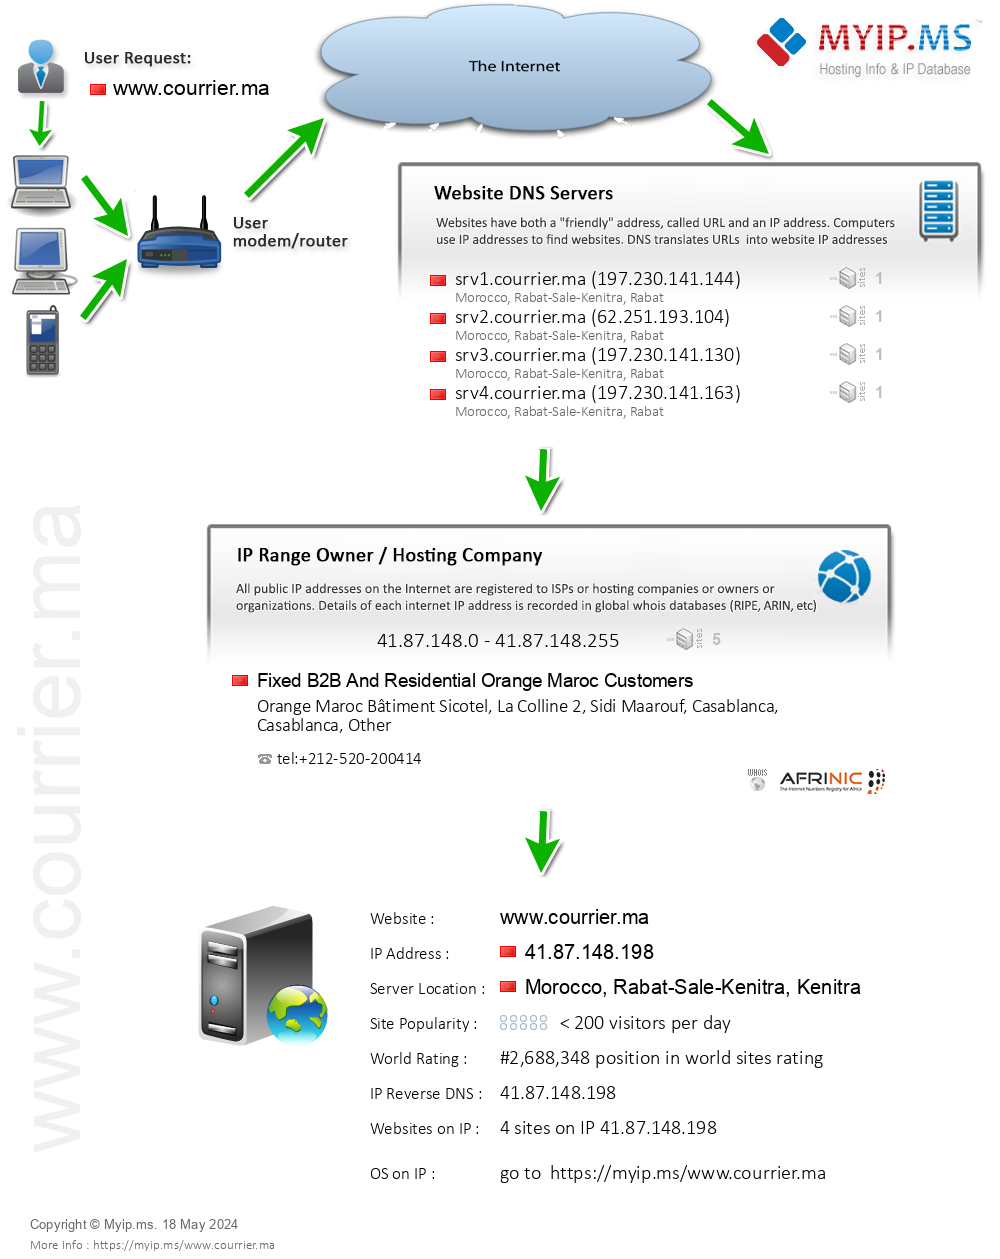 Courrier.ma - Website Hosting Visual IP Diagram